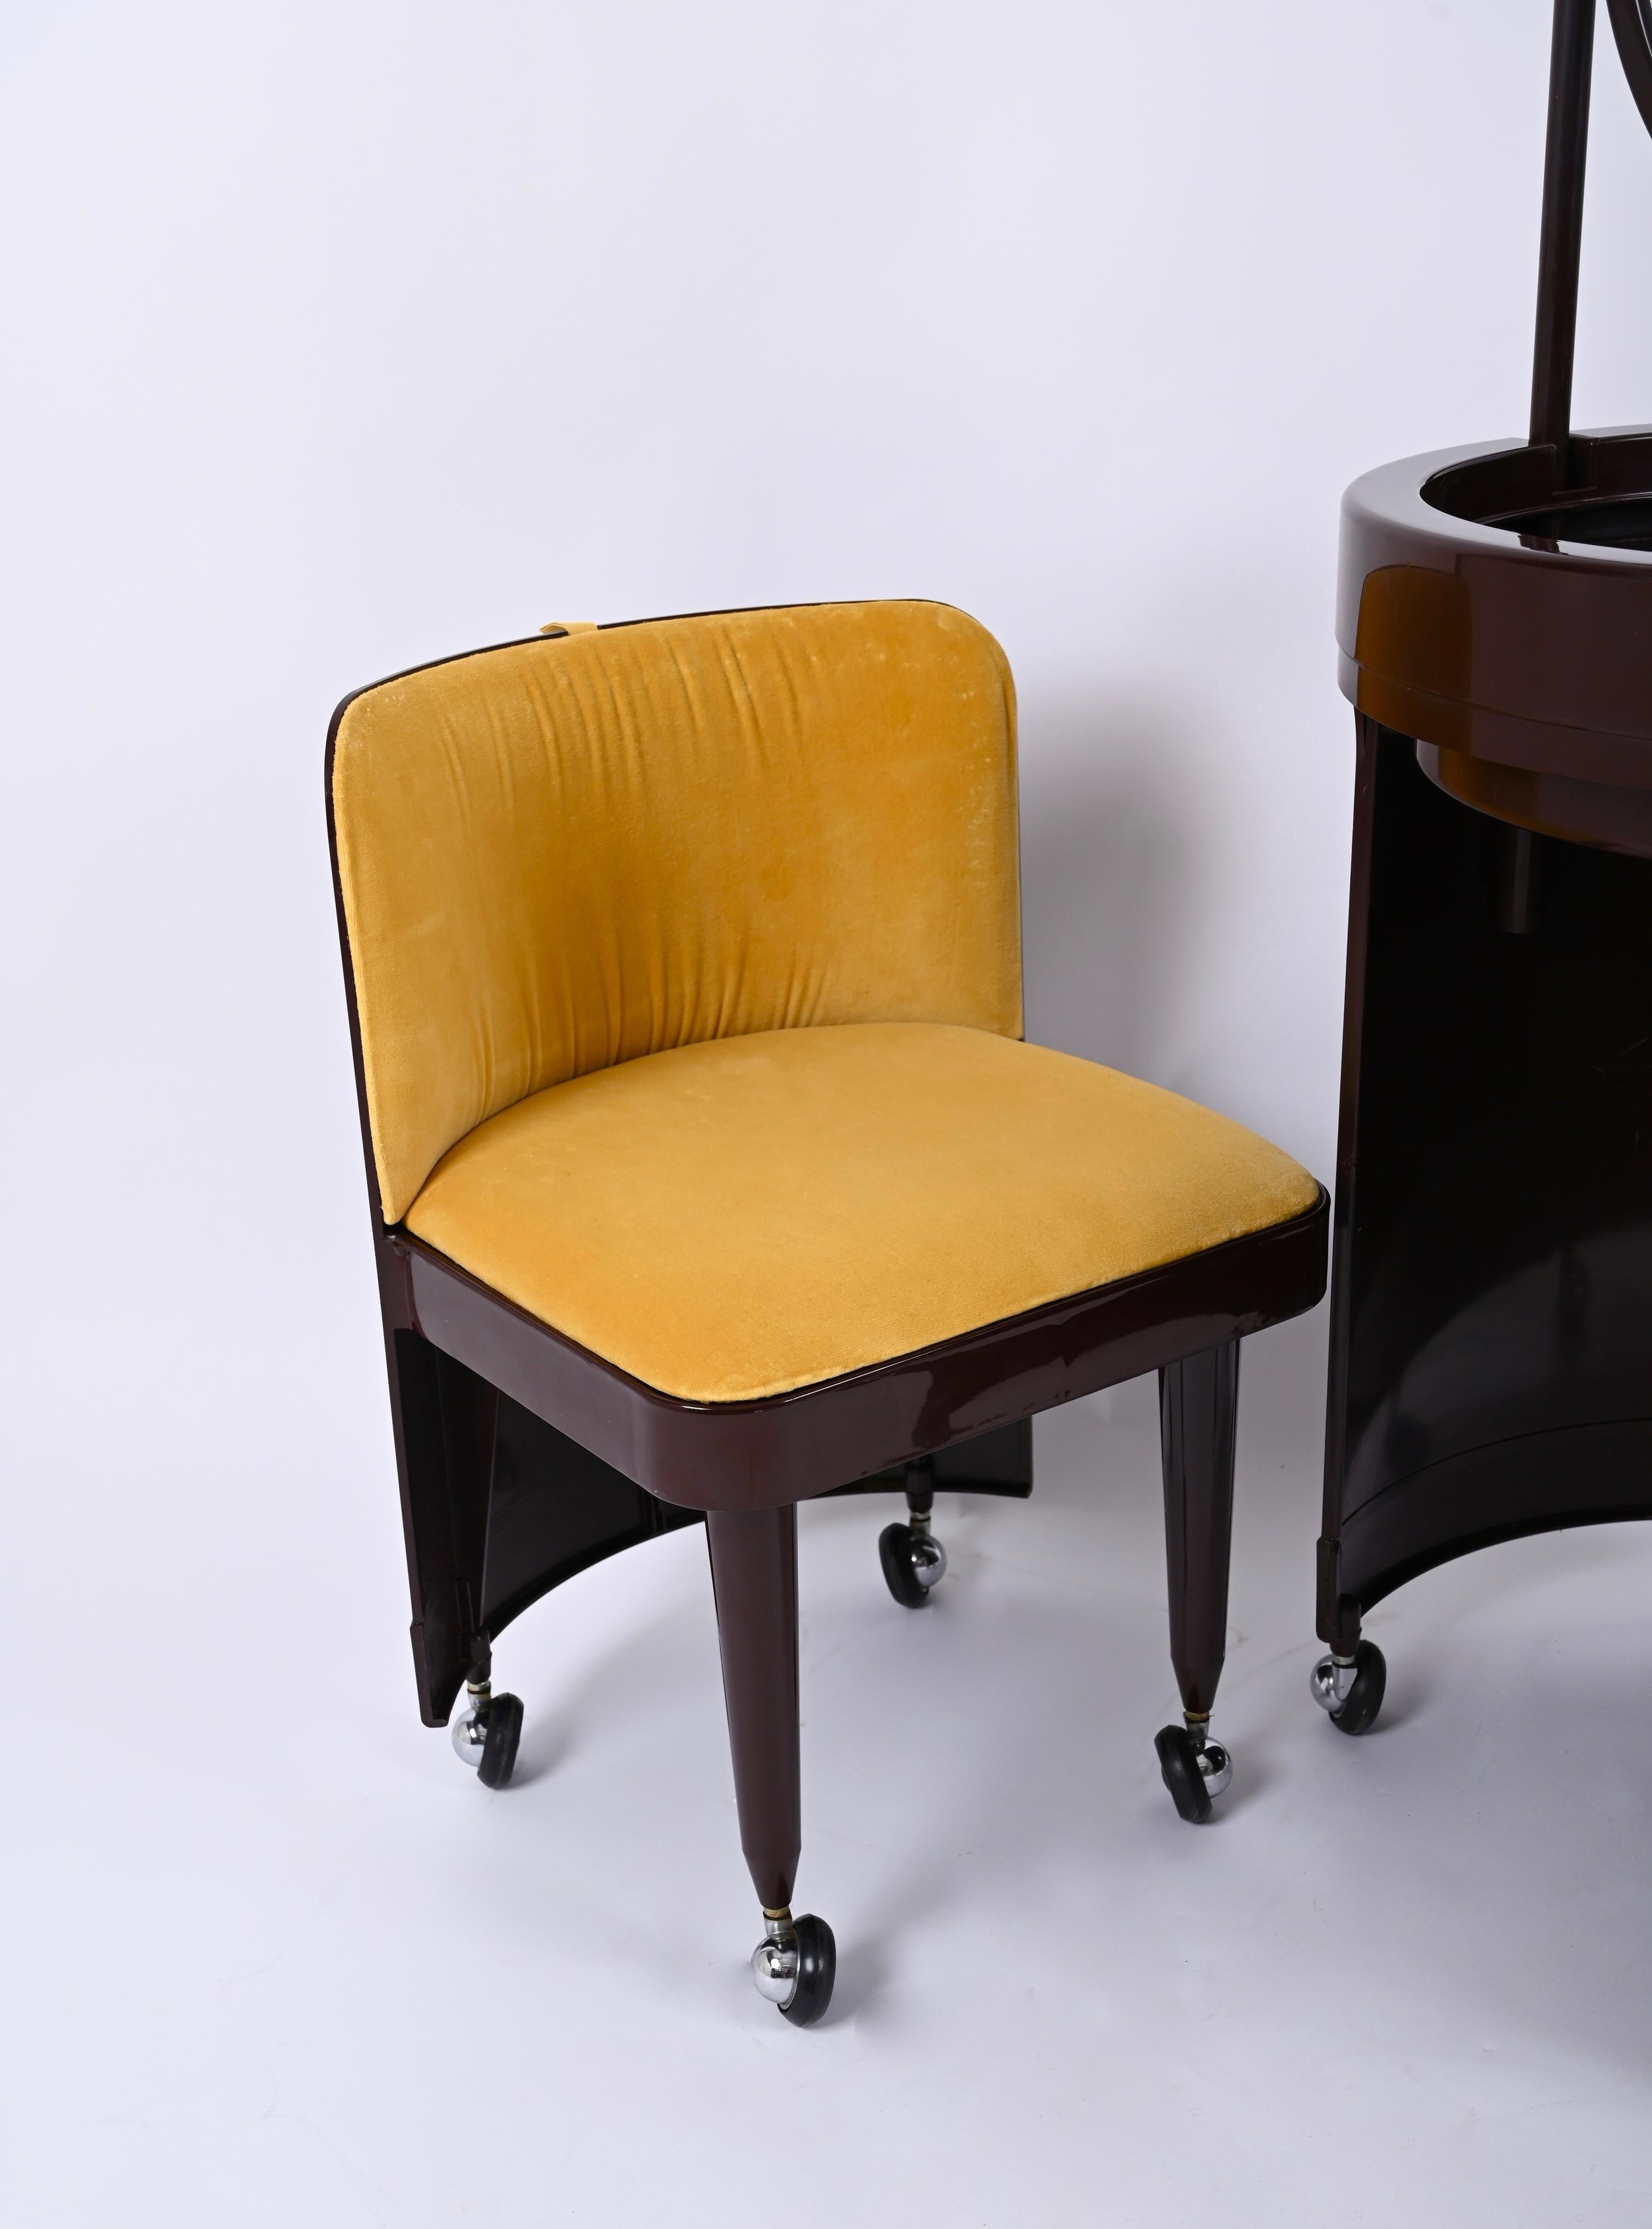 Studio Kastilia Silvi, Italian Brown Vanity Table with Yellow Seat, 1970s 2